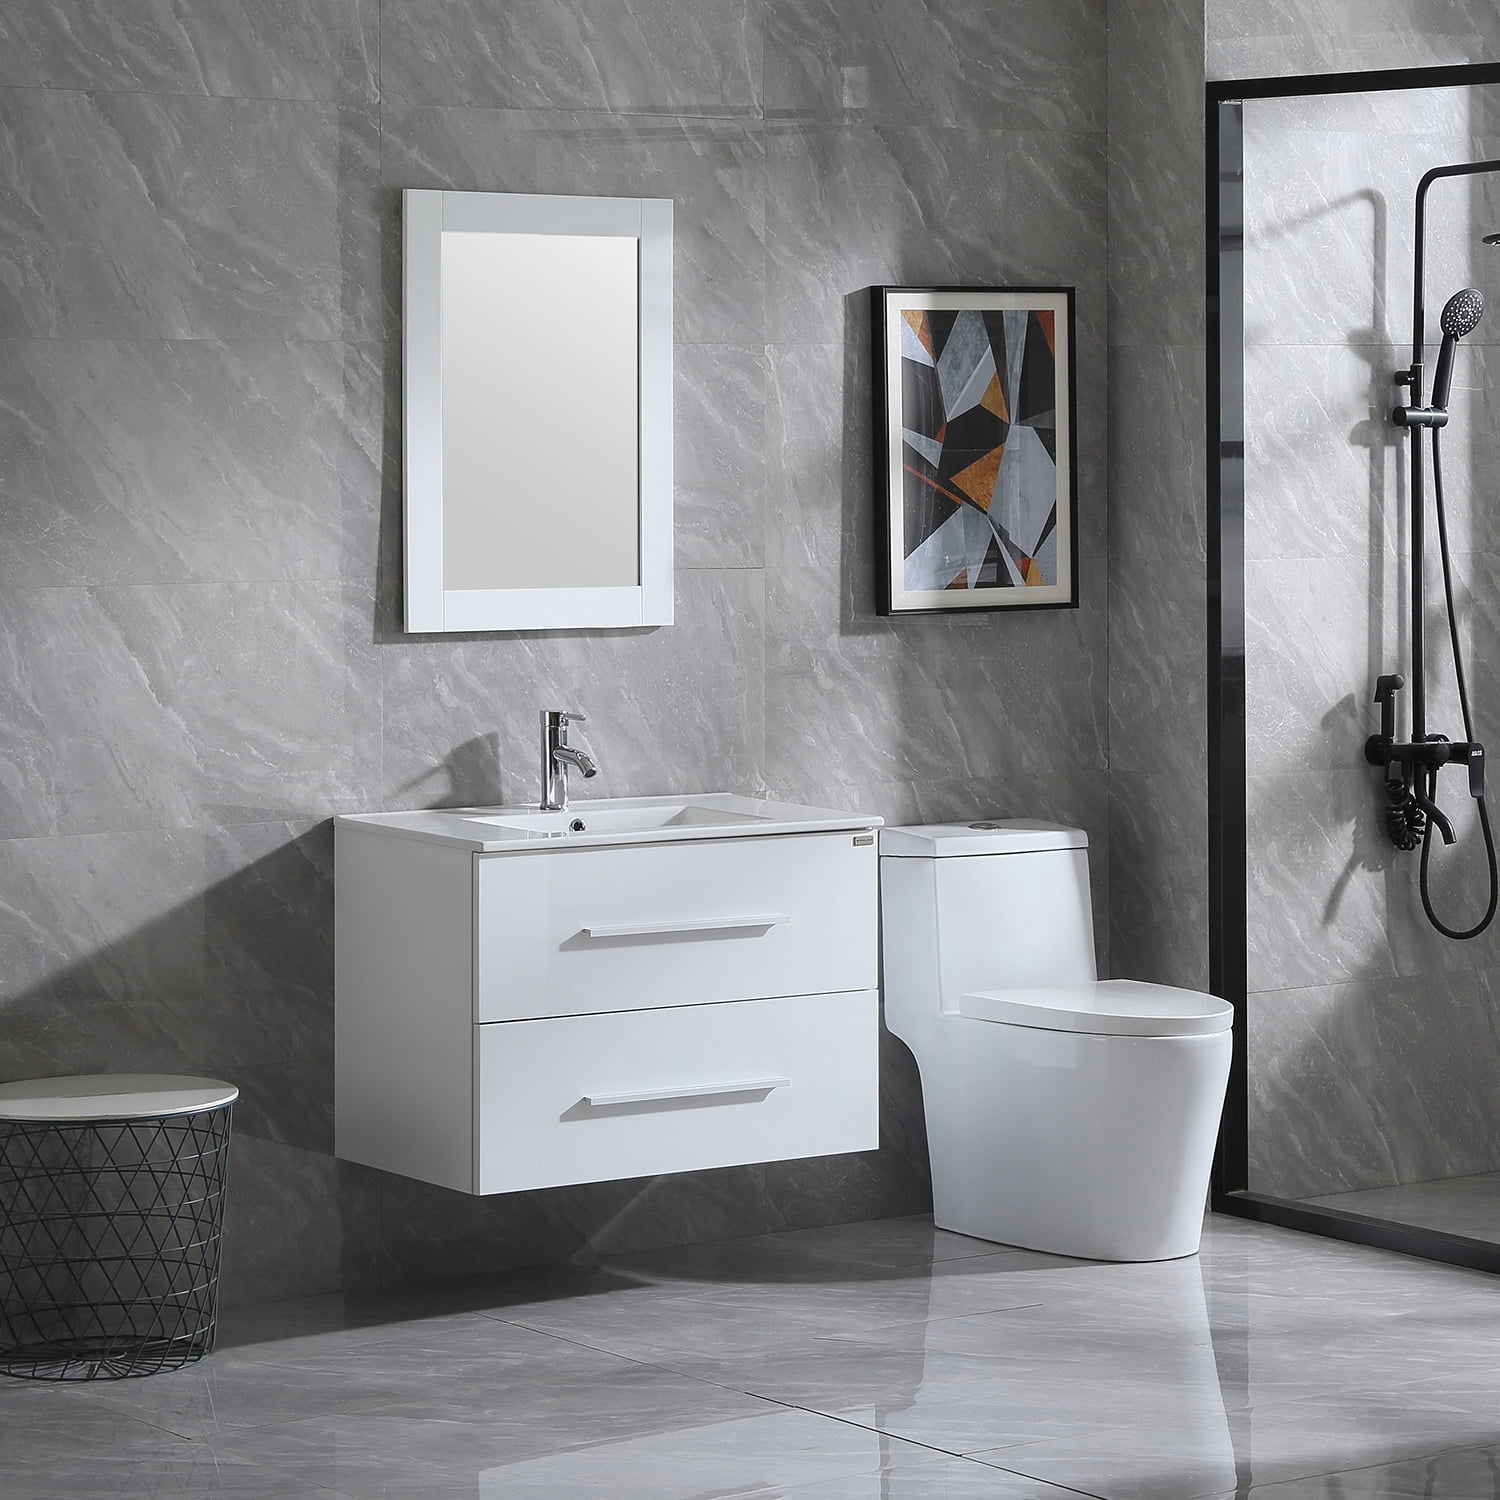 19" Wall Mount Bathroom Vanity Cabinet Glass/Ceramics Sink Faucet Drain Combo 